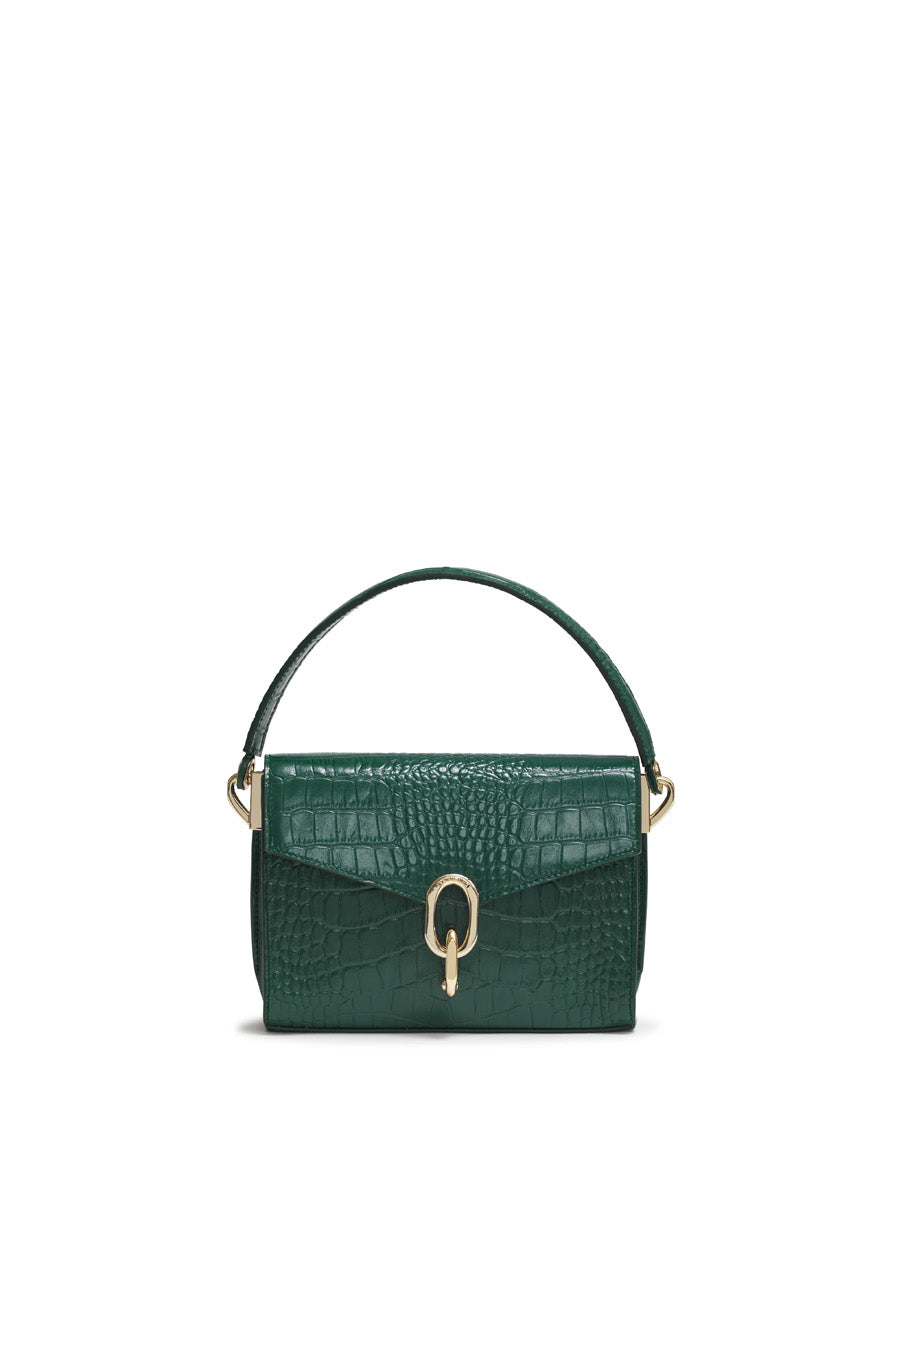 Anine Bing - Mini Colette Bag in Emerald Green